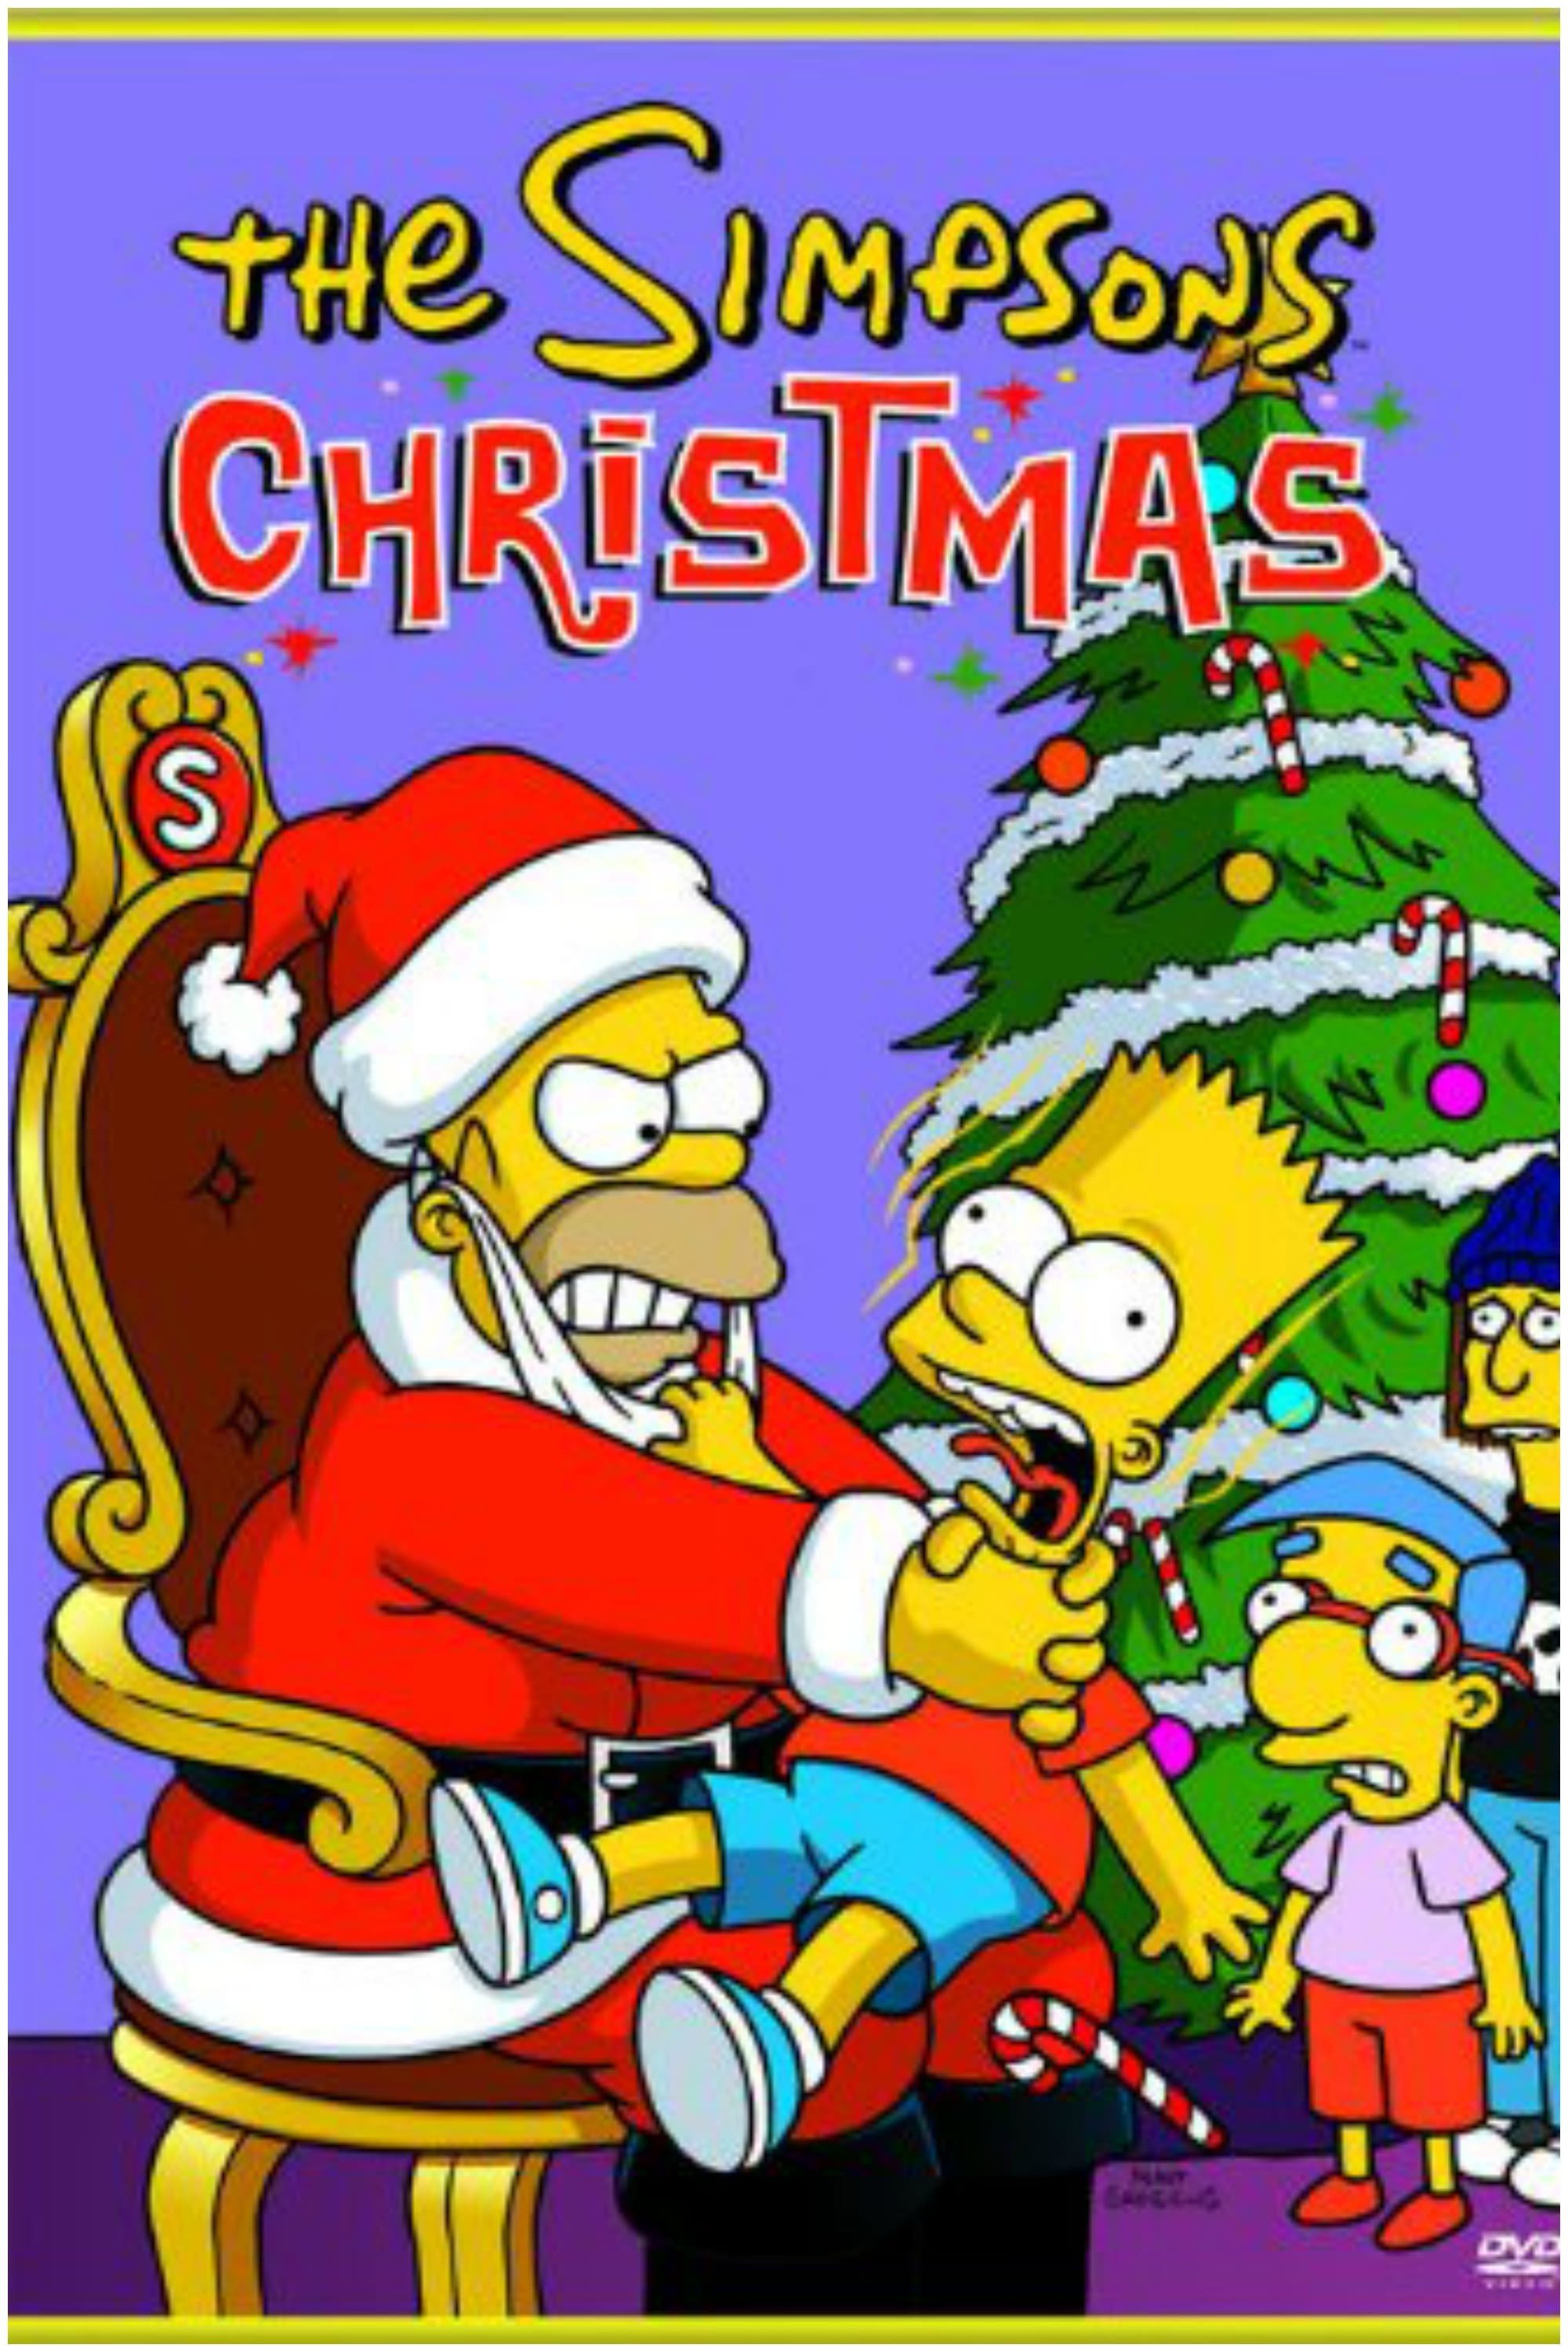 The Simpsons: Christmas